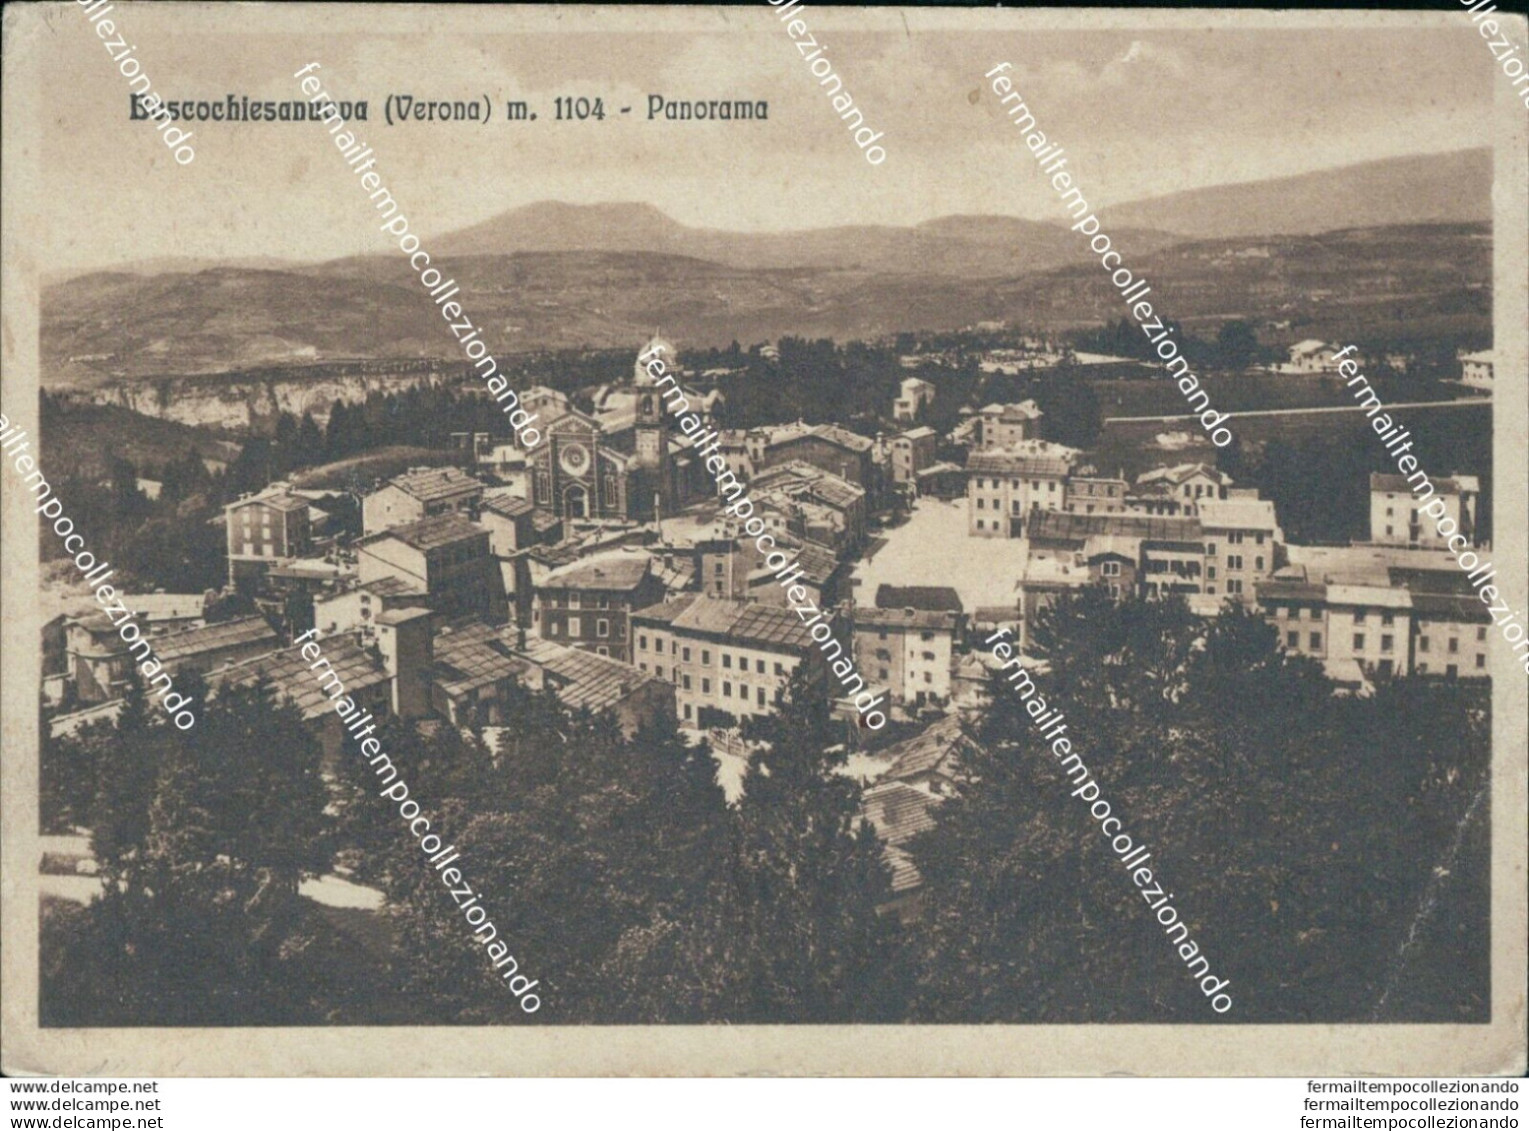 Bm137 Cartolina Boscochiesanuova Panorama Provincia Di Verona - Verona